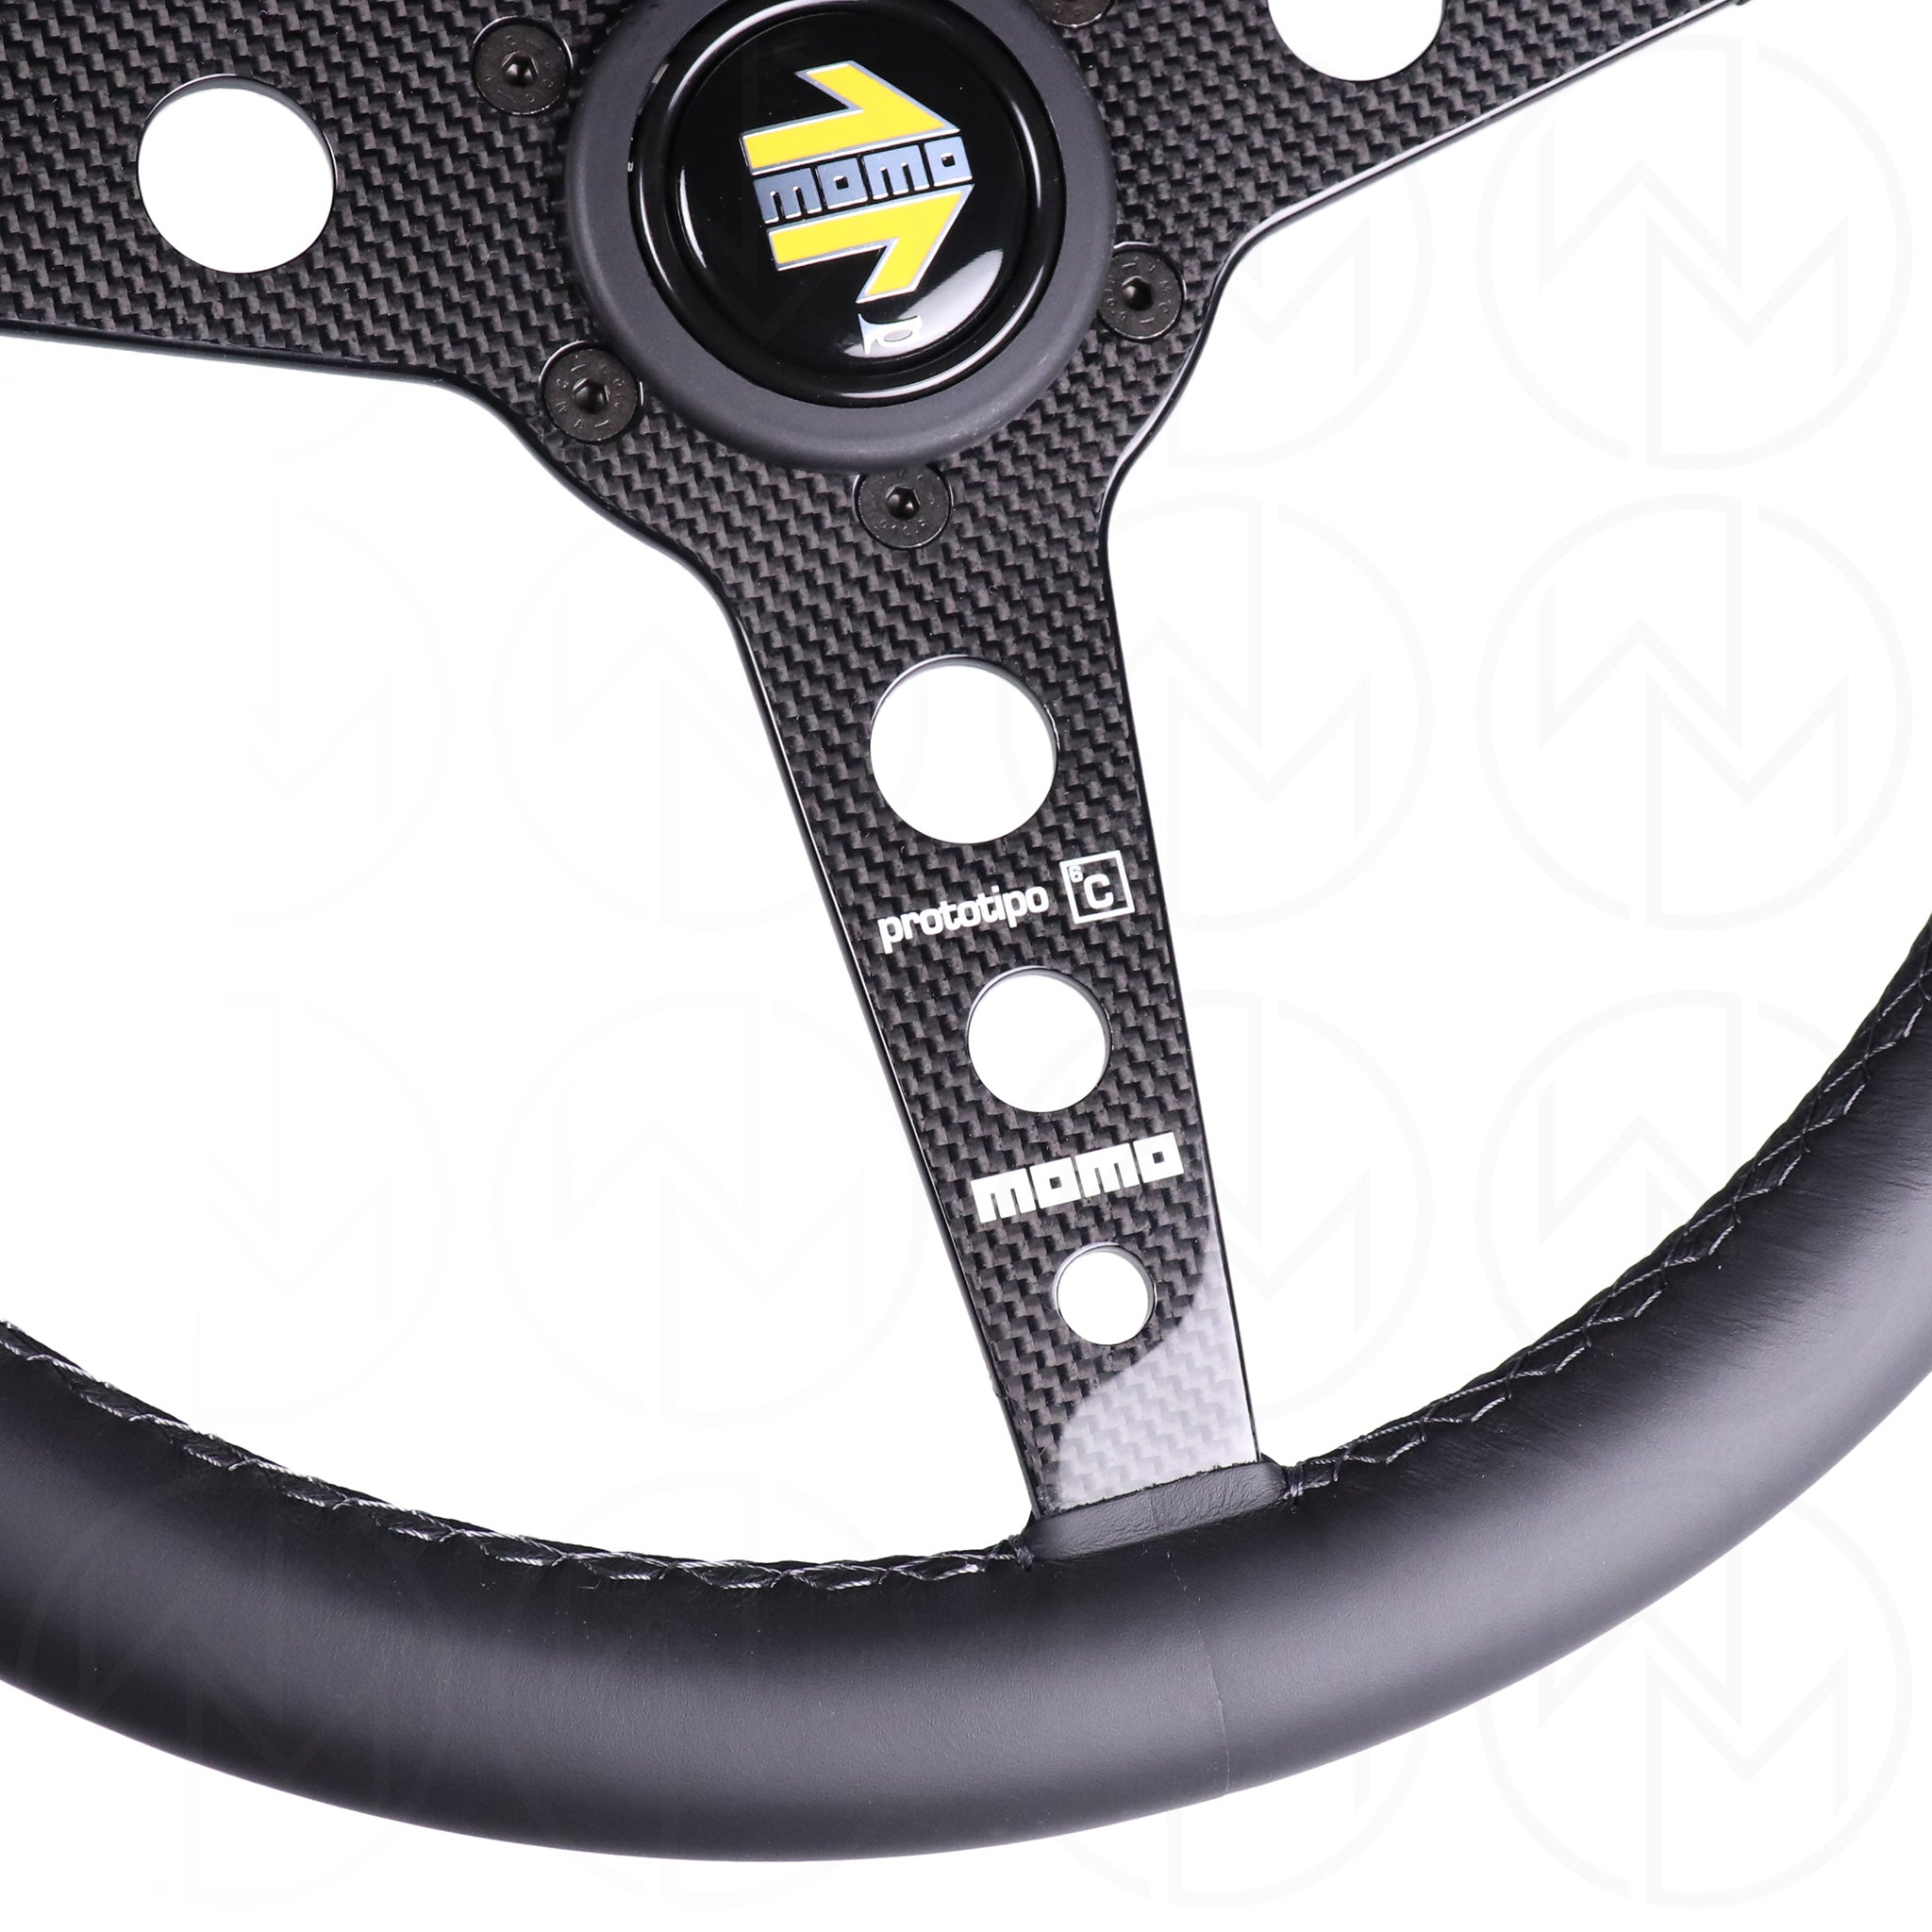 Momo Prototipo 6C Steering Wheel - 350mm Leather w/Carbon Fiber Spokes